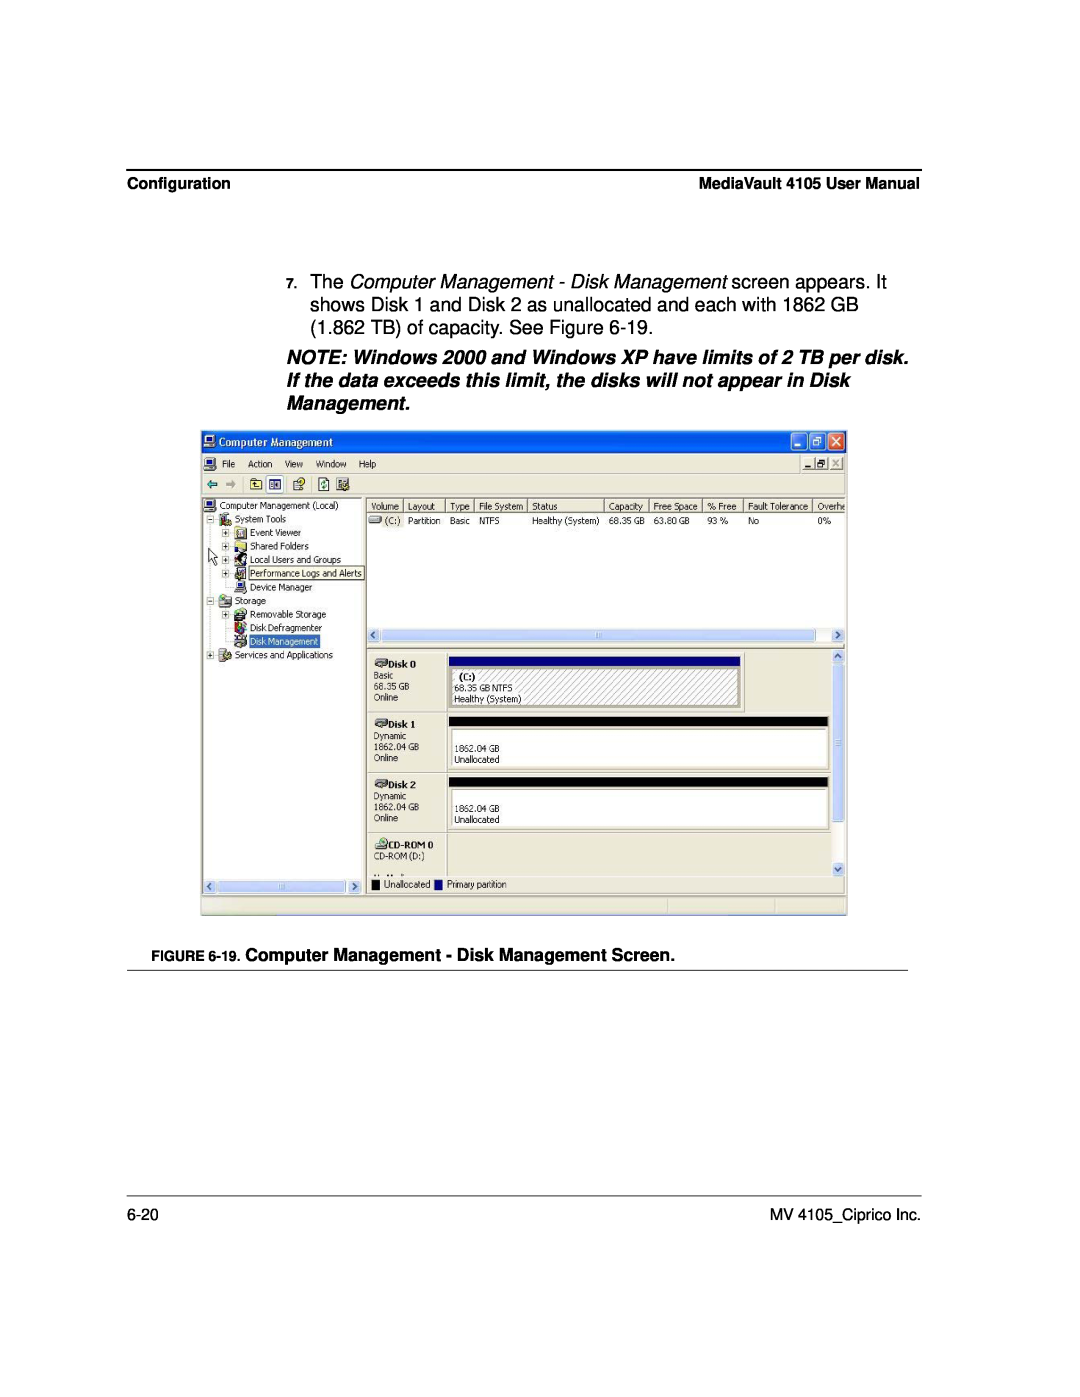 Ciprico 4105 Series user manual 19. Computer Management - Disk Management Screen, MediaVault 4105 User Manual 